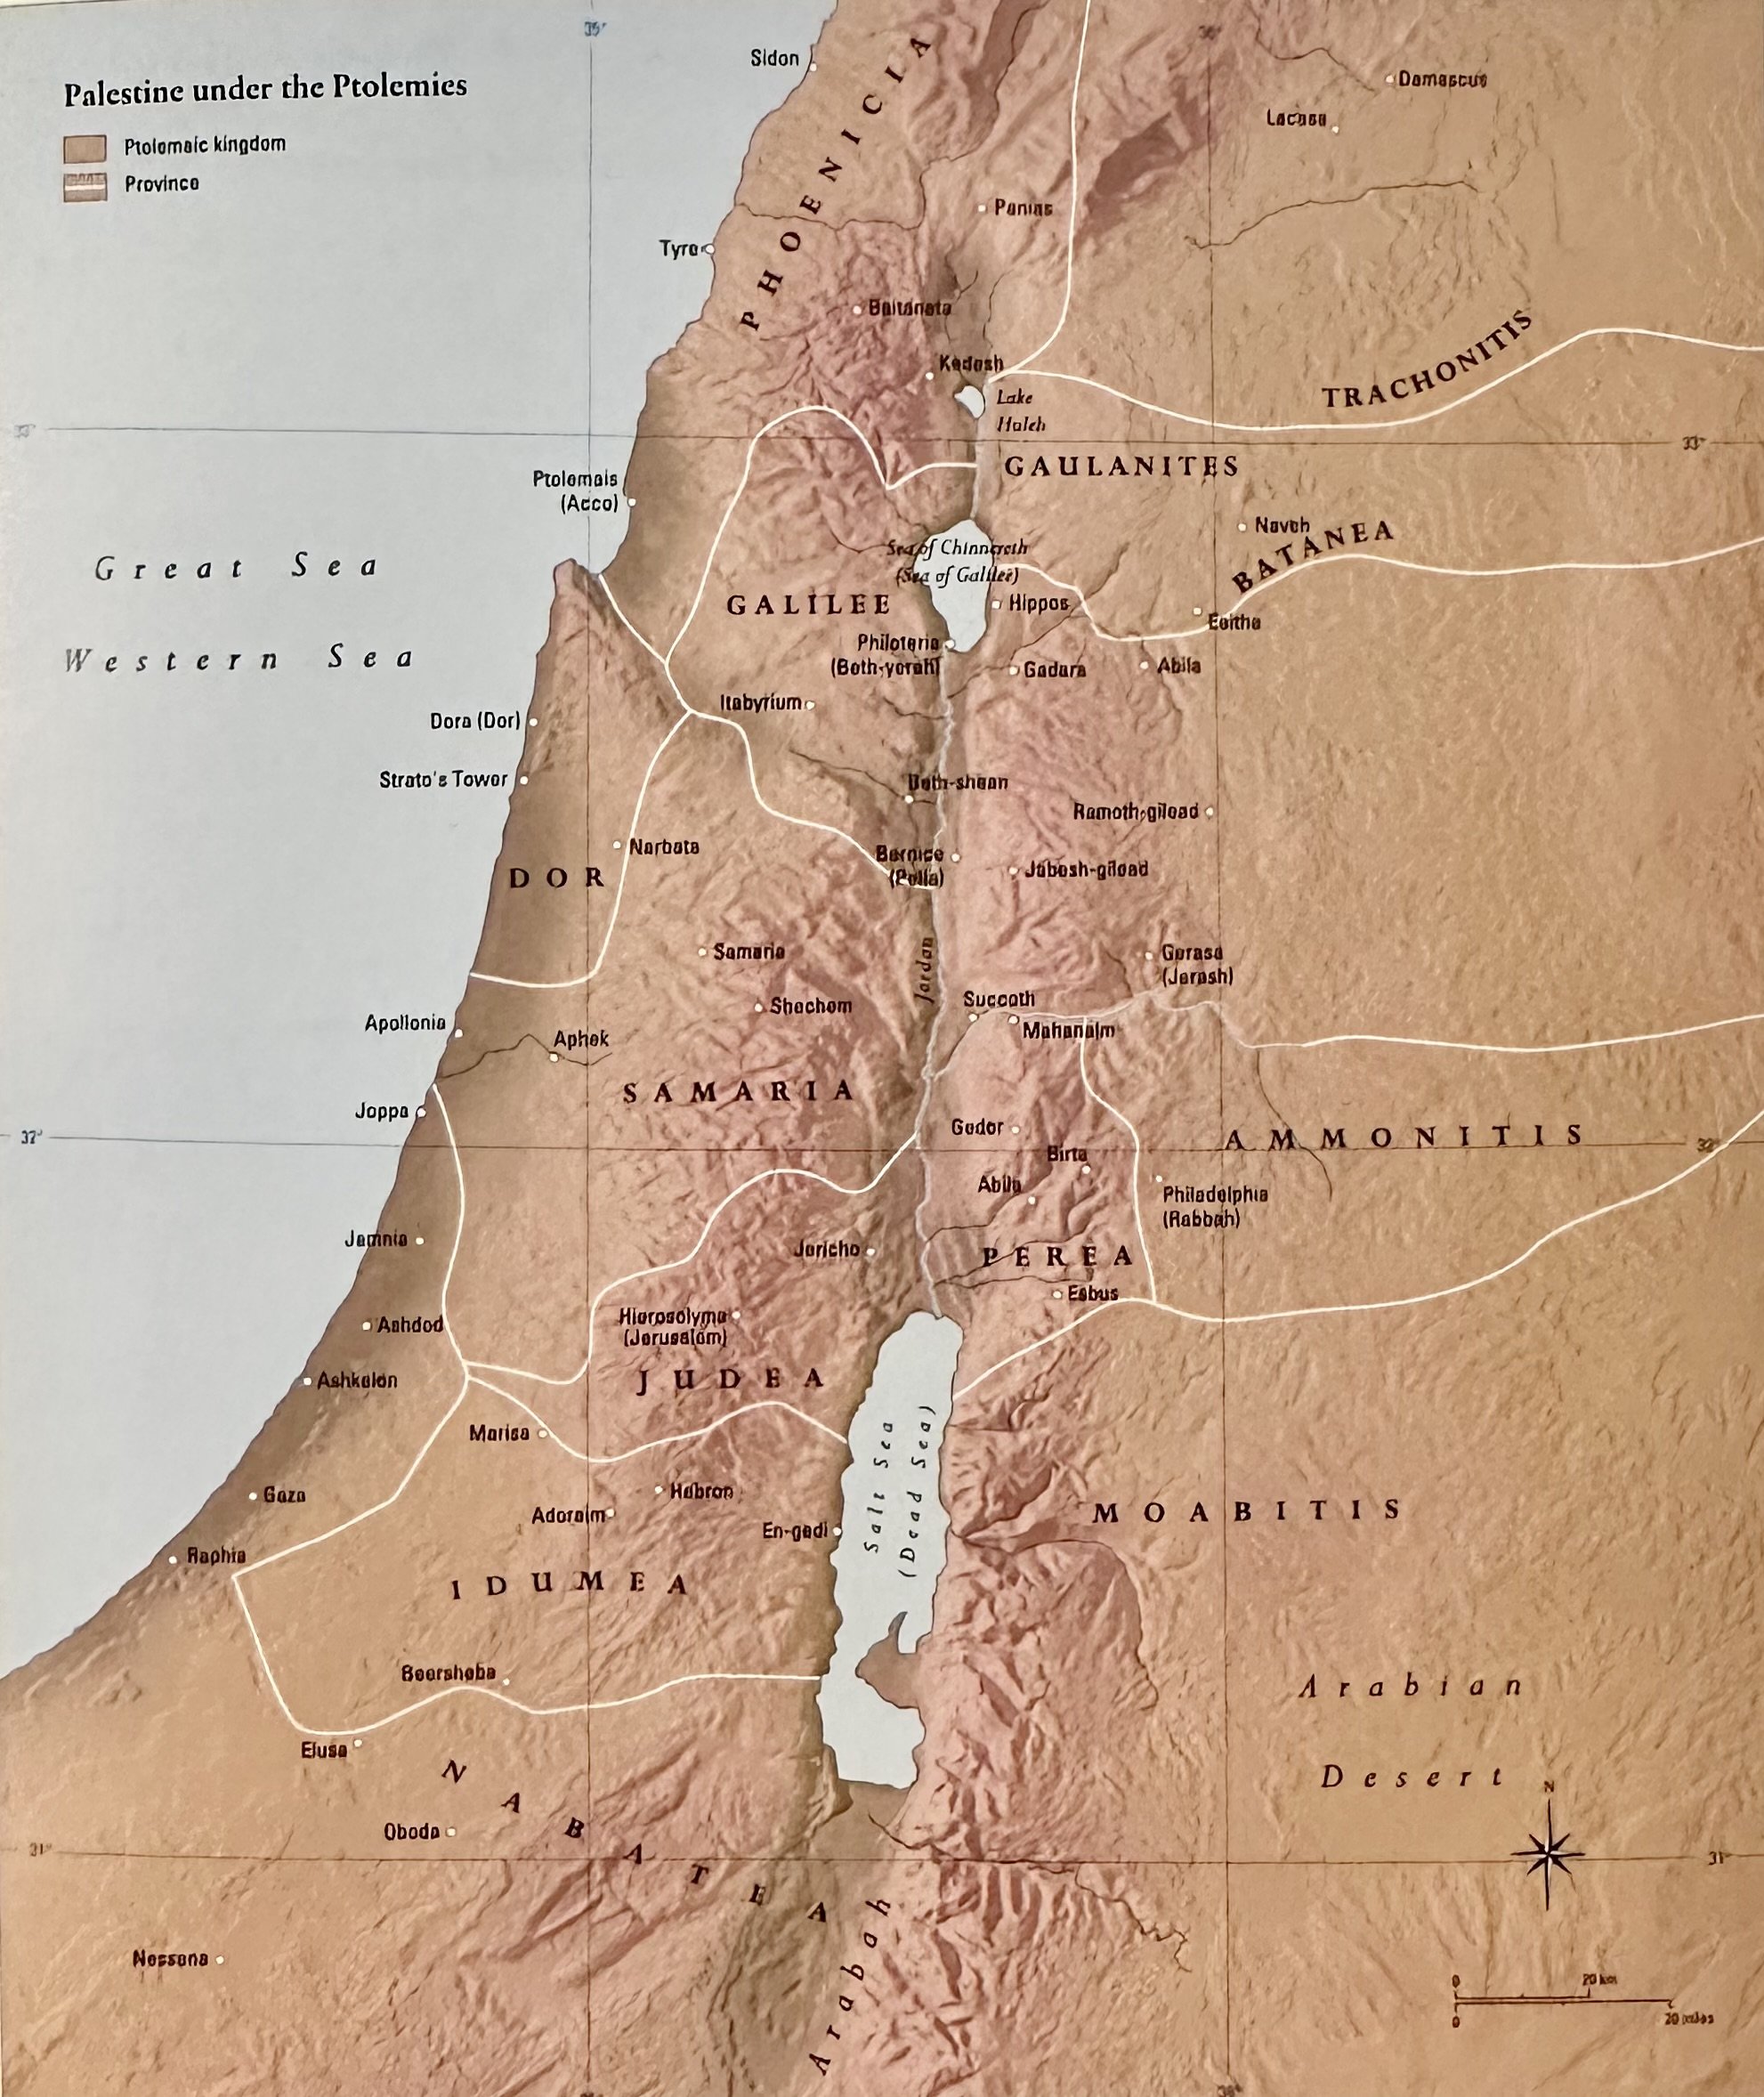 Palestine under the Ptolemies Atlas of the Bible.jpeg